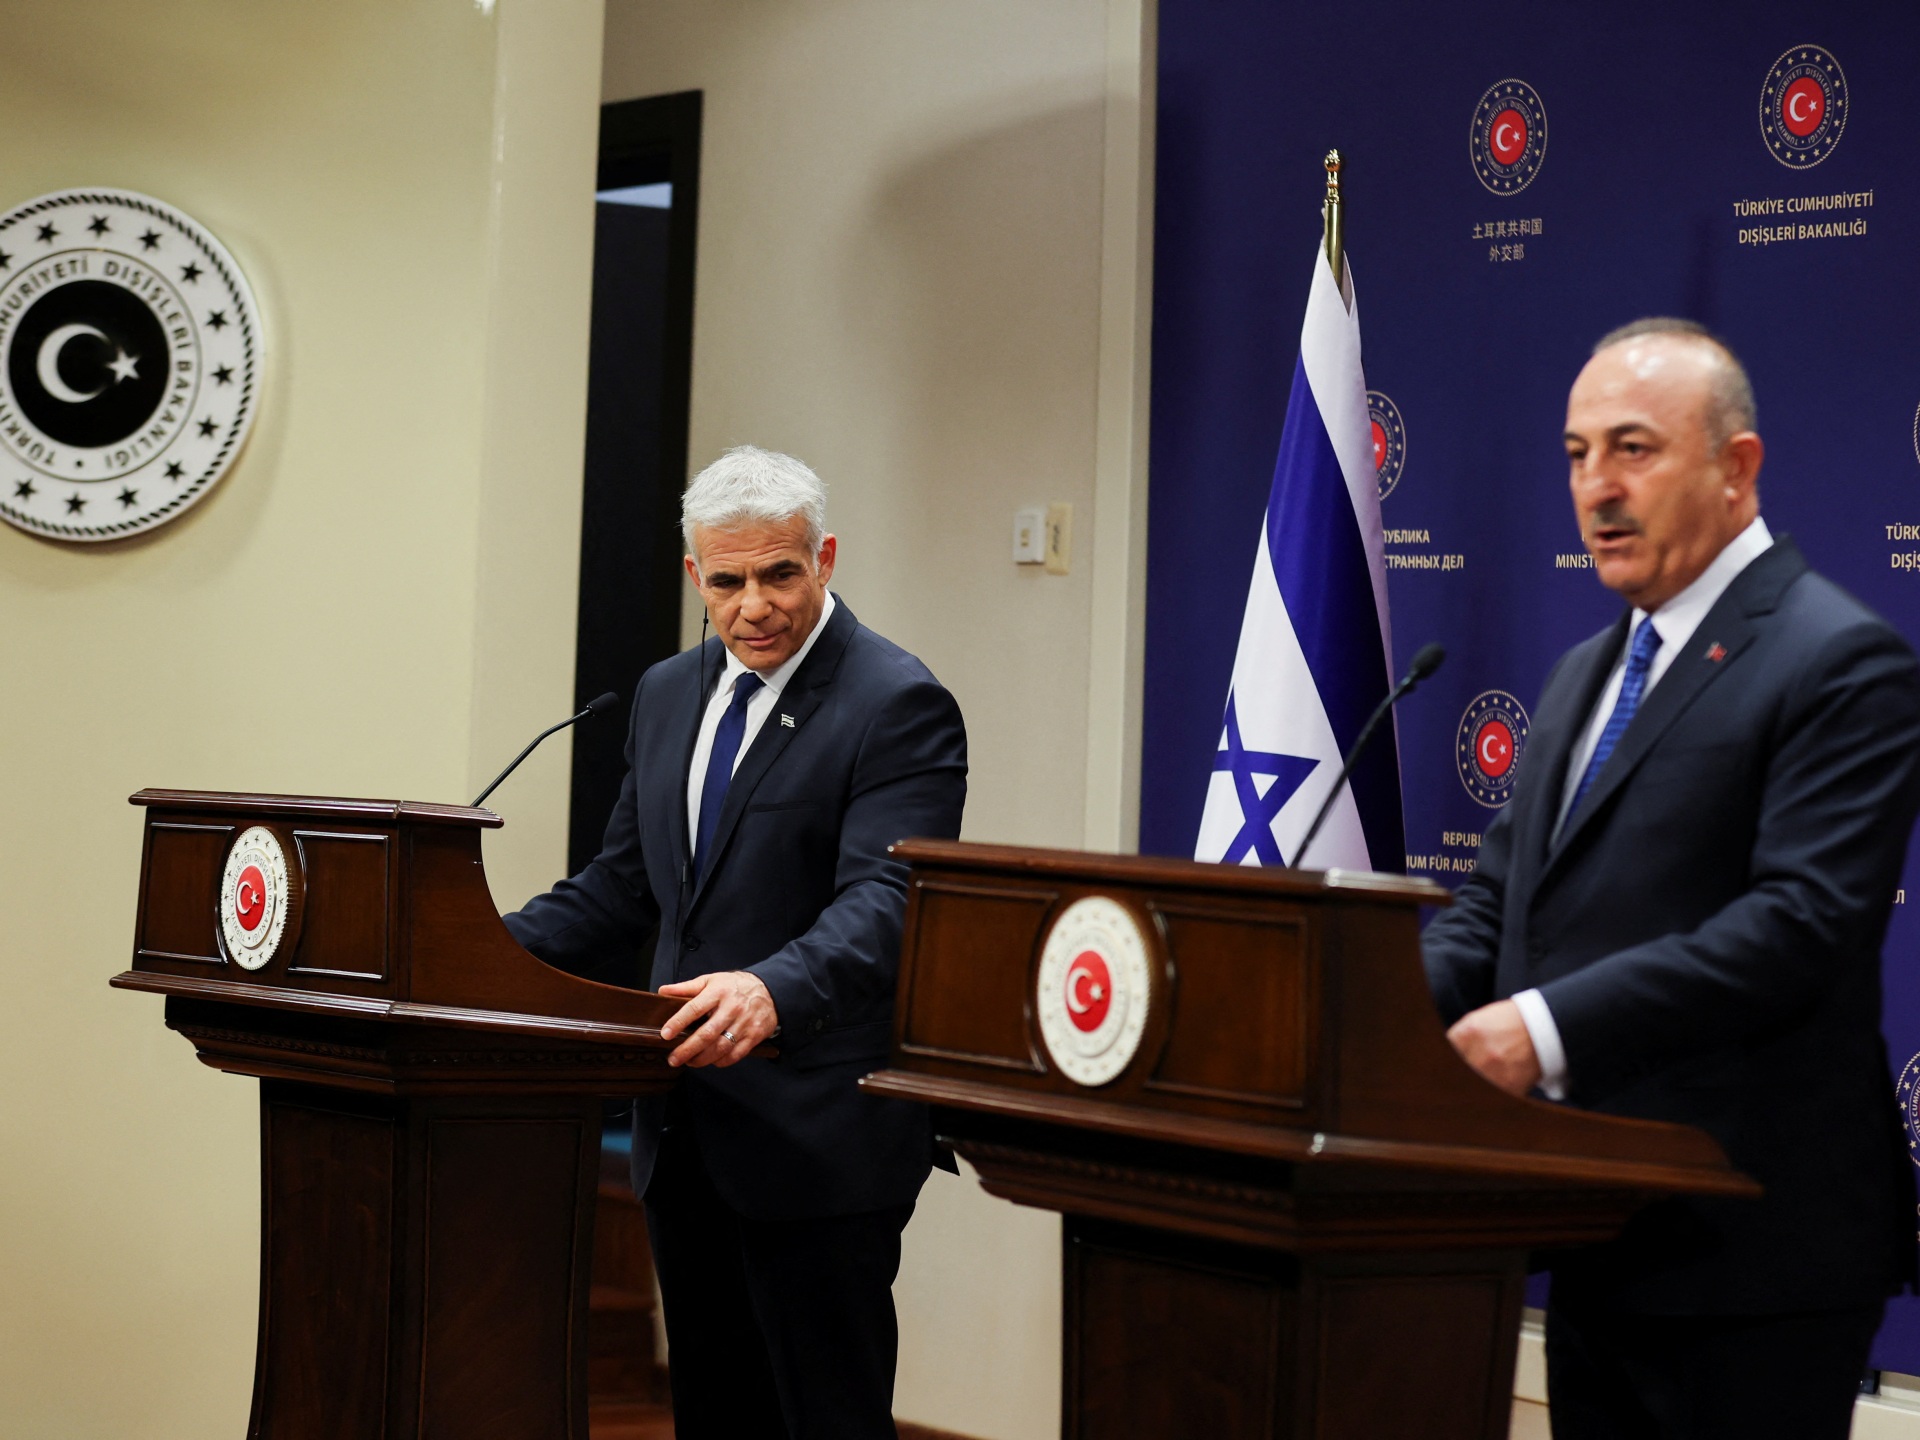 Turkey, Israel to restore full diplomatic relations